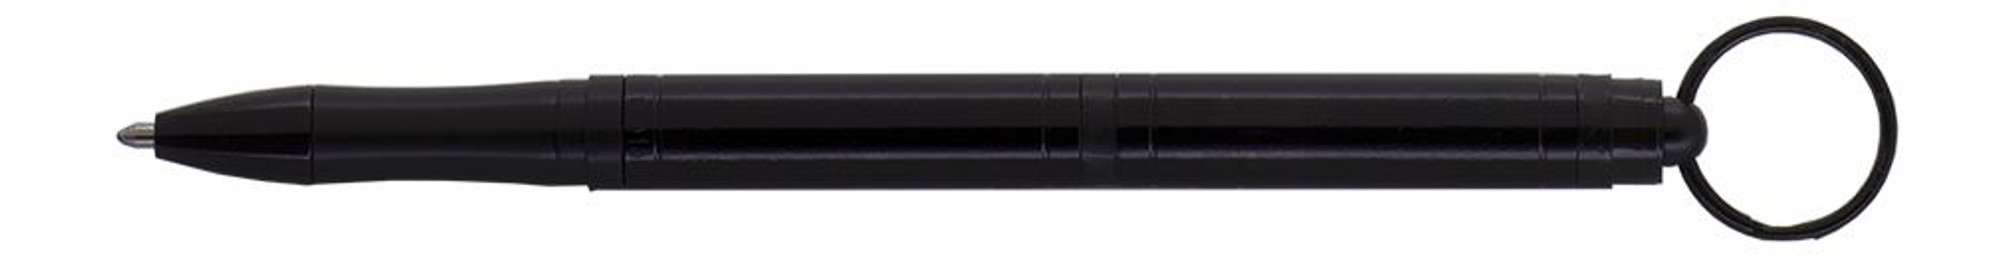 Fisher Space Pen Tough Touch Keychain Pen w/ Stylus- Black